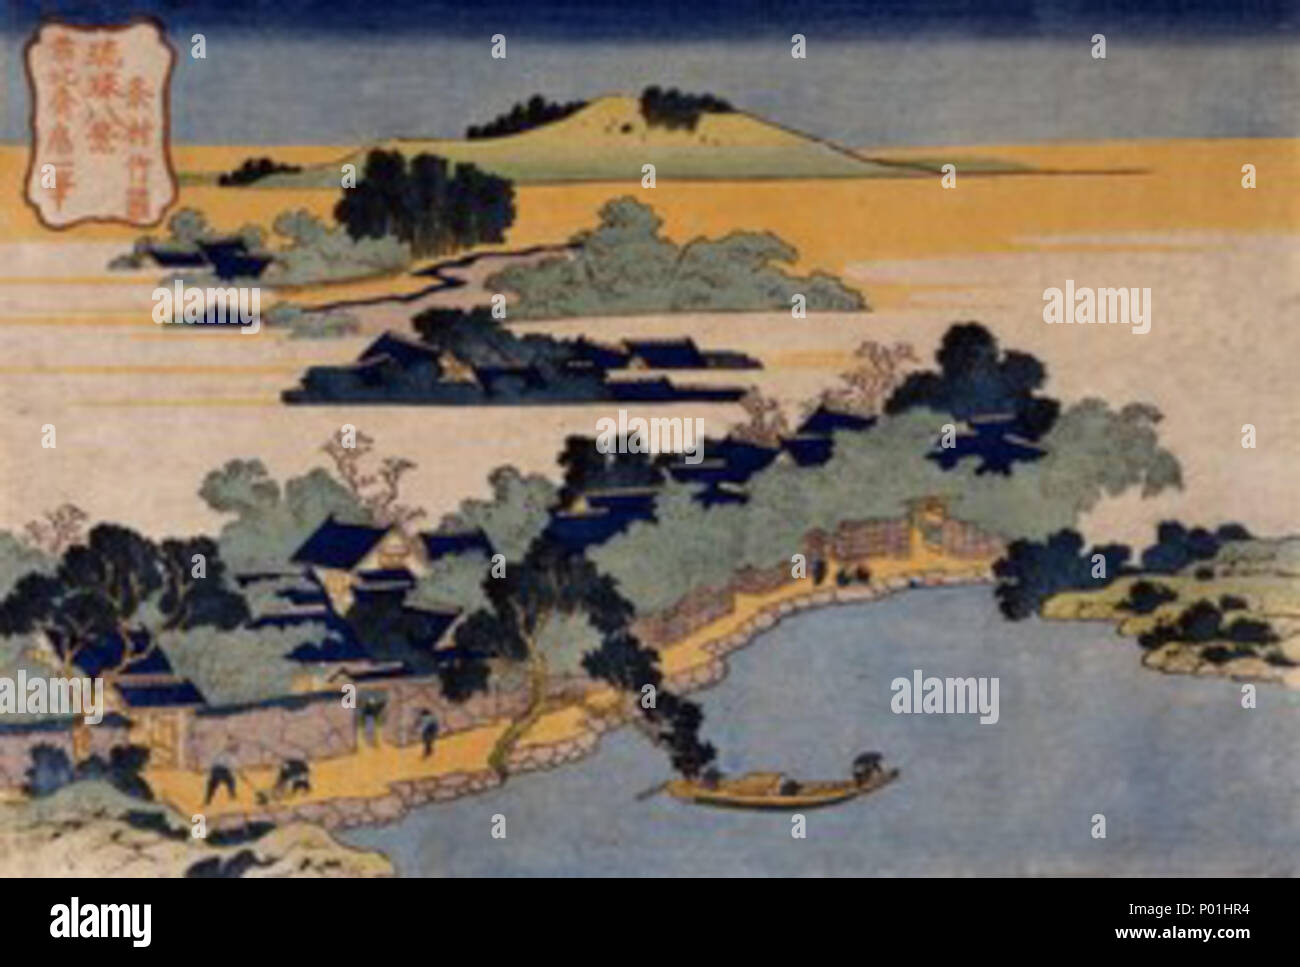 . Englisch: Bambus Zaun an Kume Dorf aus acht Ansichten der Ryūkyū Inseln, von Hokusai, Urasoe Art Museum, Urasoe, Okinawa, Japan 日本語: 琉球八景 粂村竹籬. ca. 1832. Hokusai (1760-1849) 8 8 Blick auf den Ryukyu-inseln von Hokusai (Urasoe Art Museum) - Bambus Hecke bei Kume Dorf Stockfoto